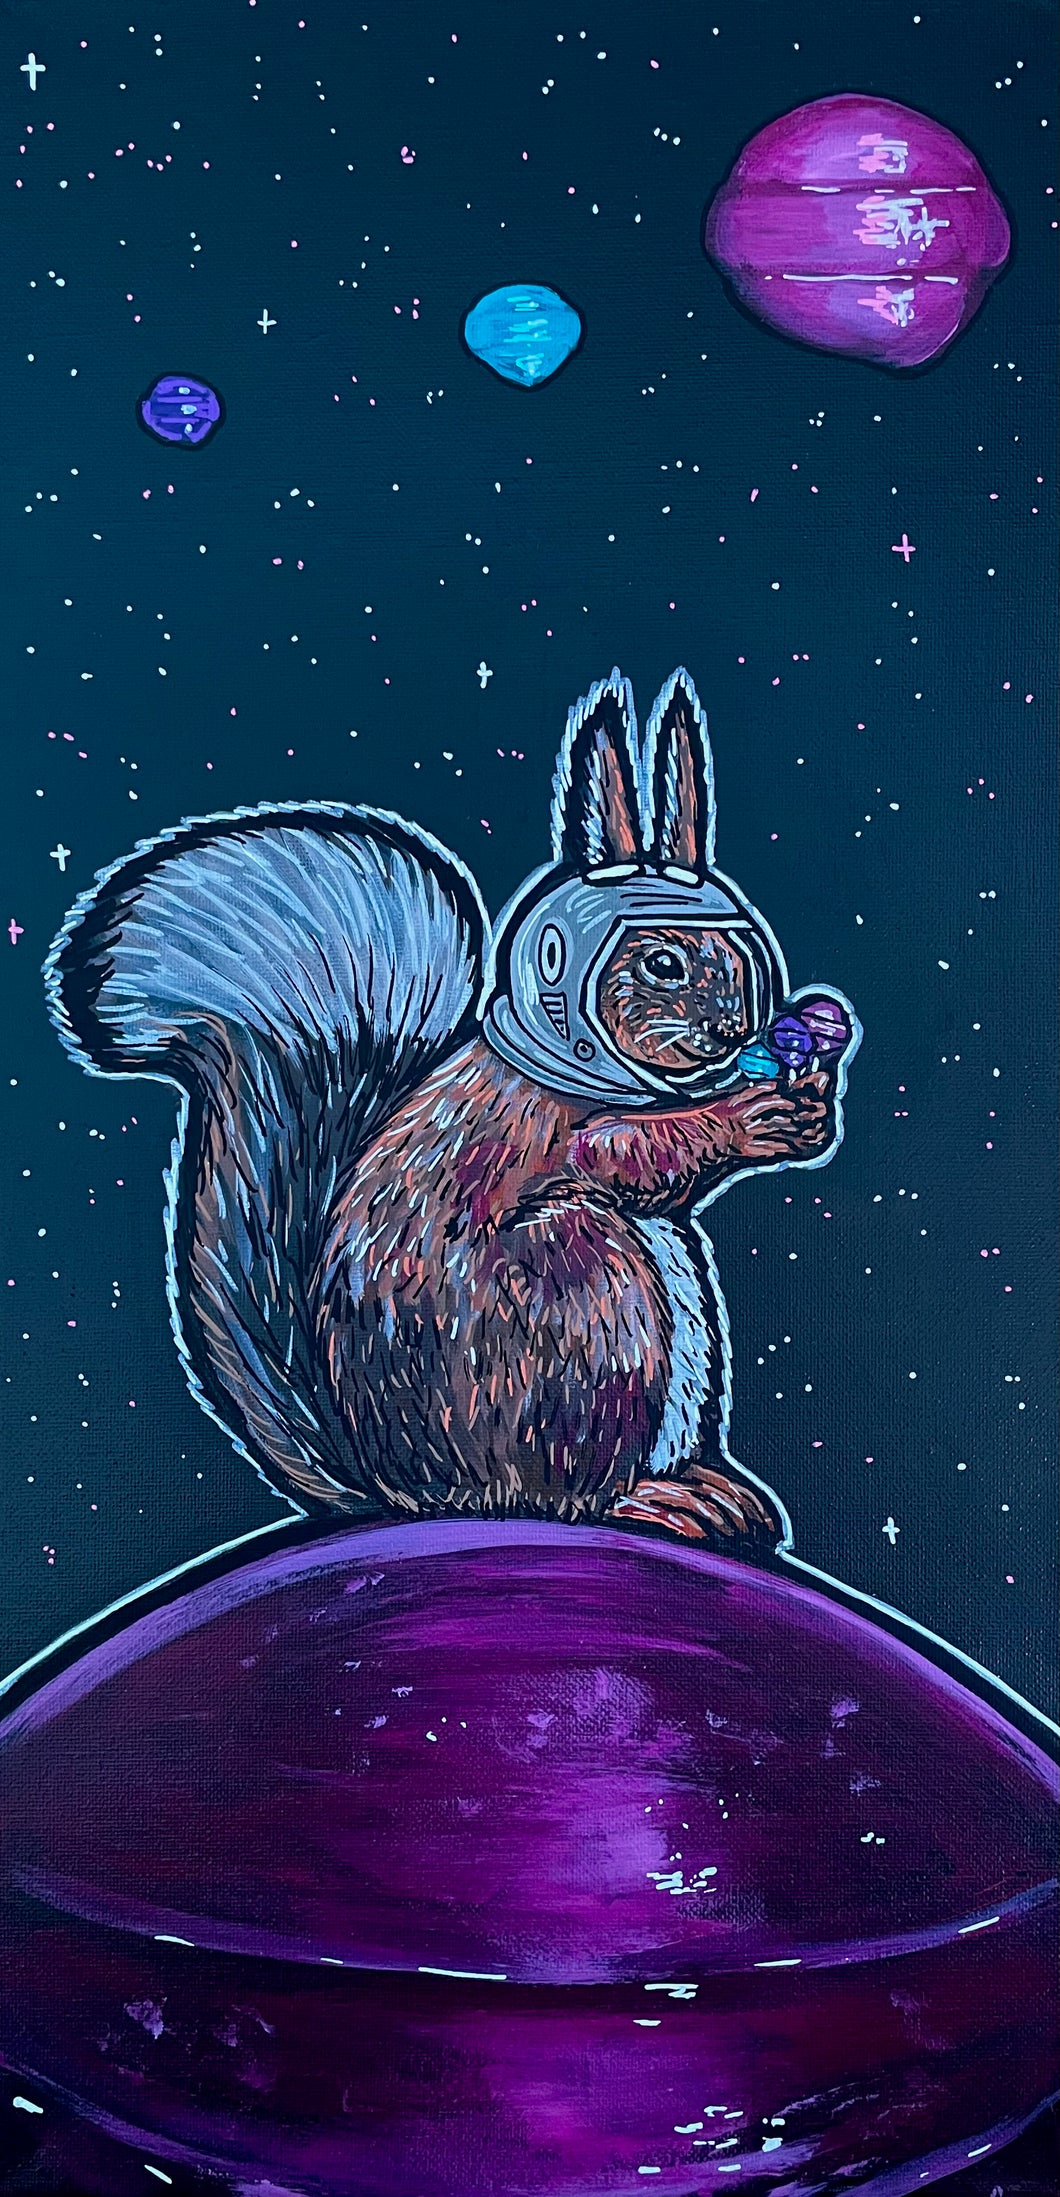 Space squirrel!